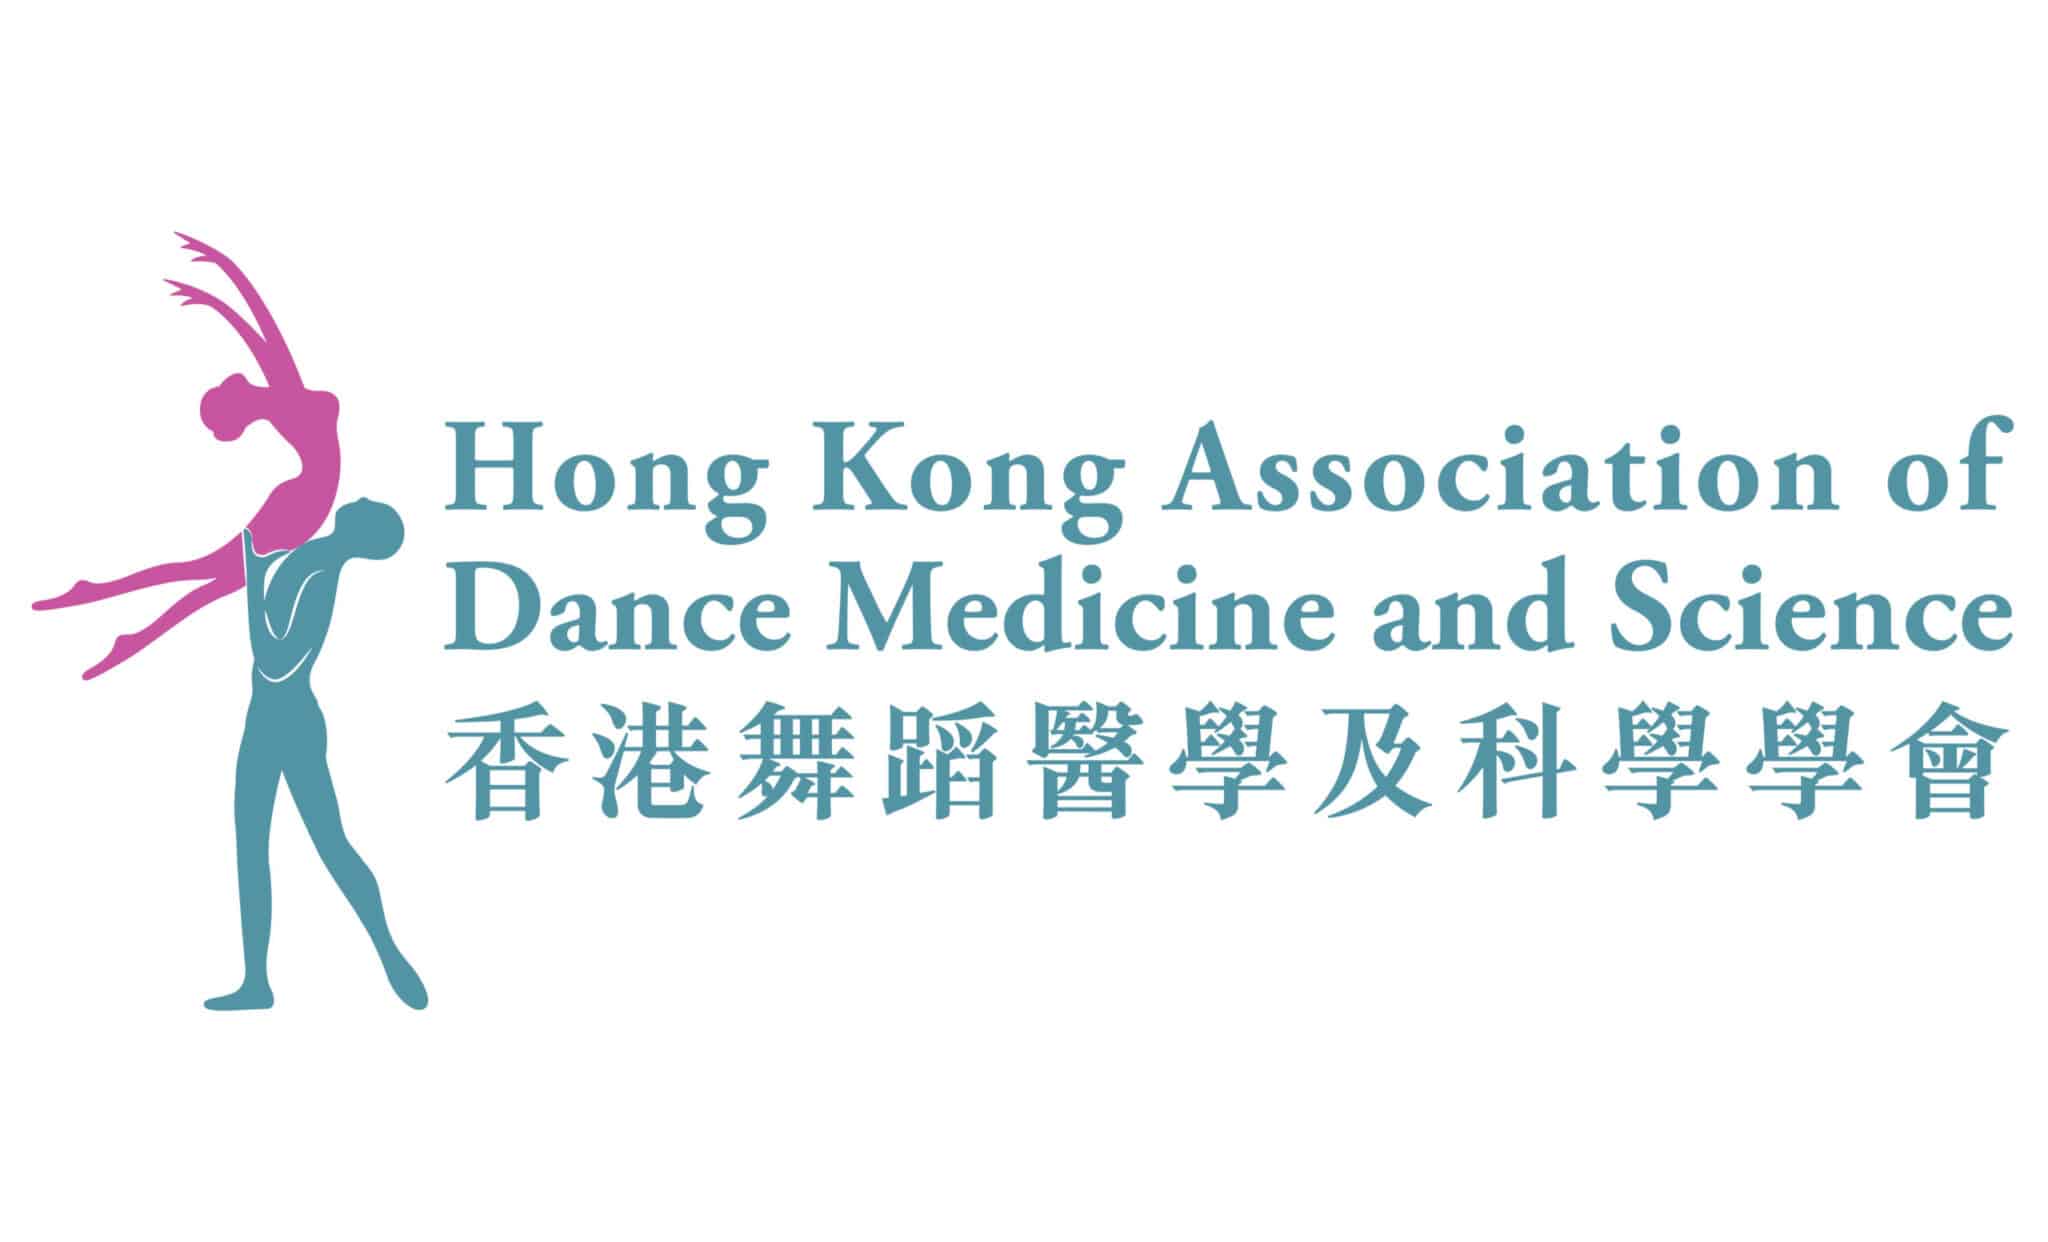 Hong Kong Association of Dance Medicine and Science logo